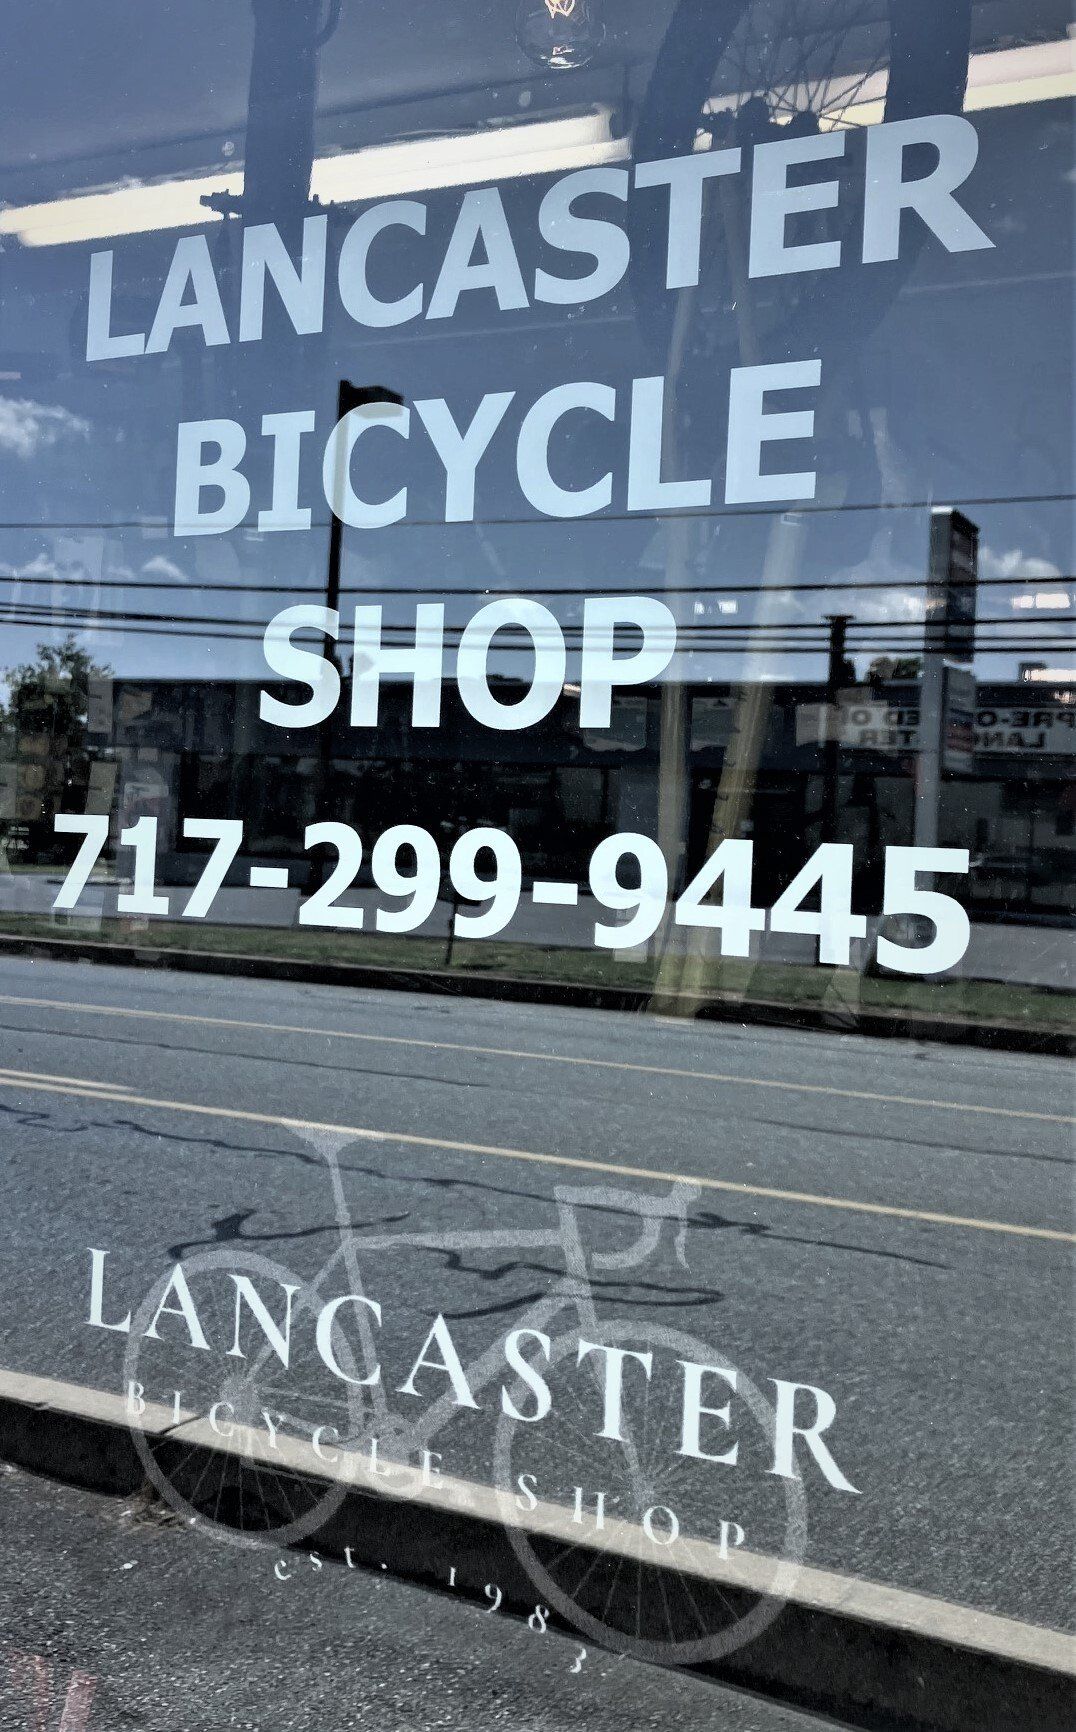 Contact Lancaster Bicycle Shop